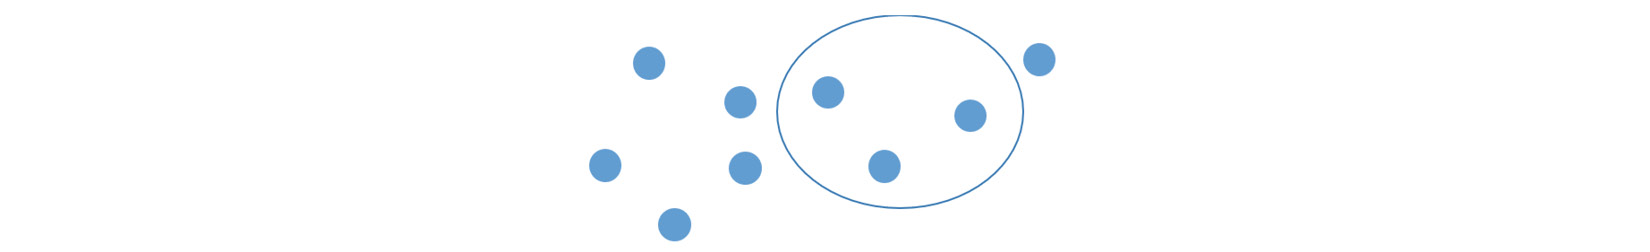 Figure 2.21 – Gestalt principle of enclosure
